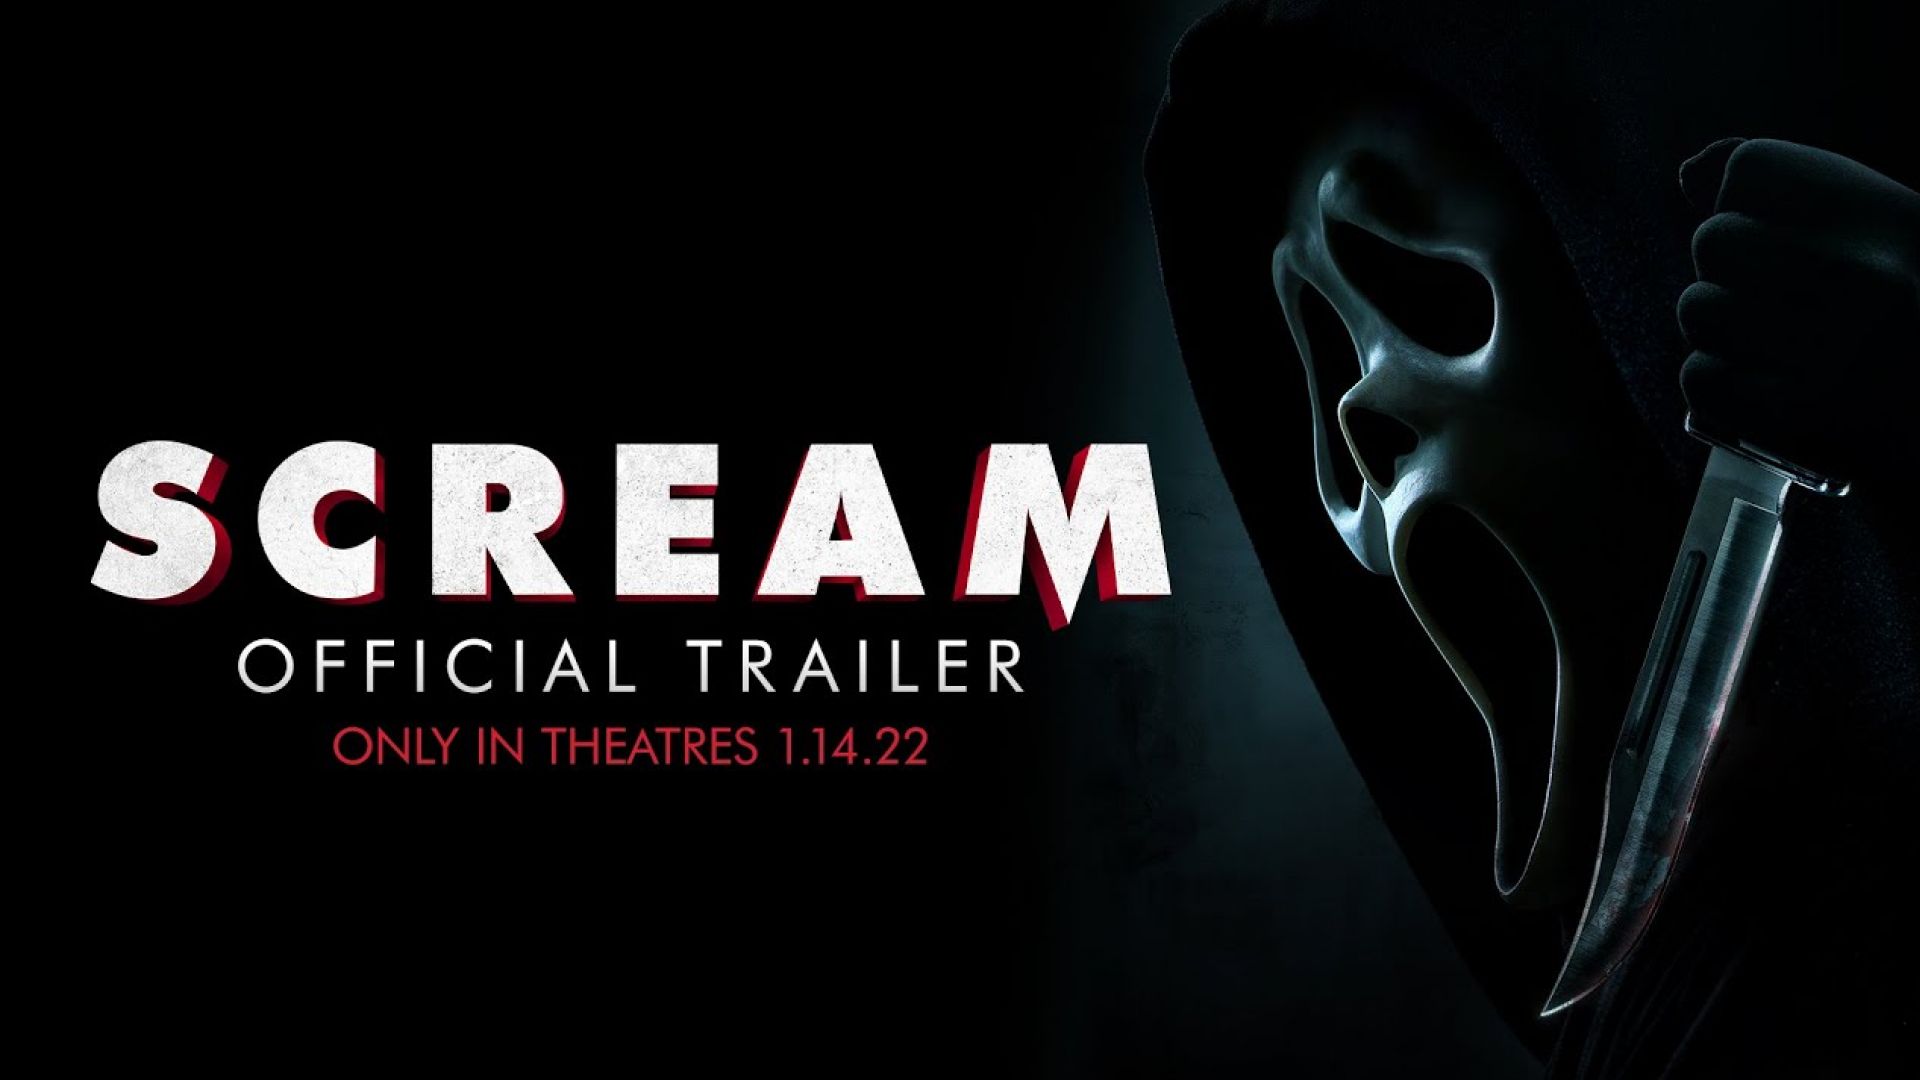 ‘Scream’ Official Trailer 